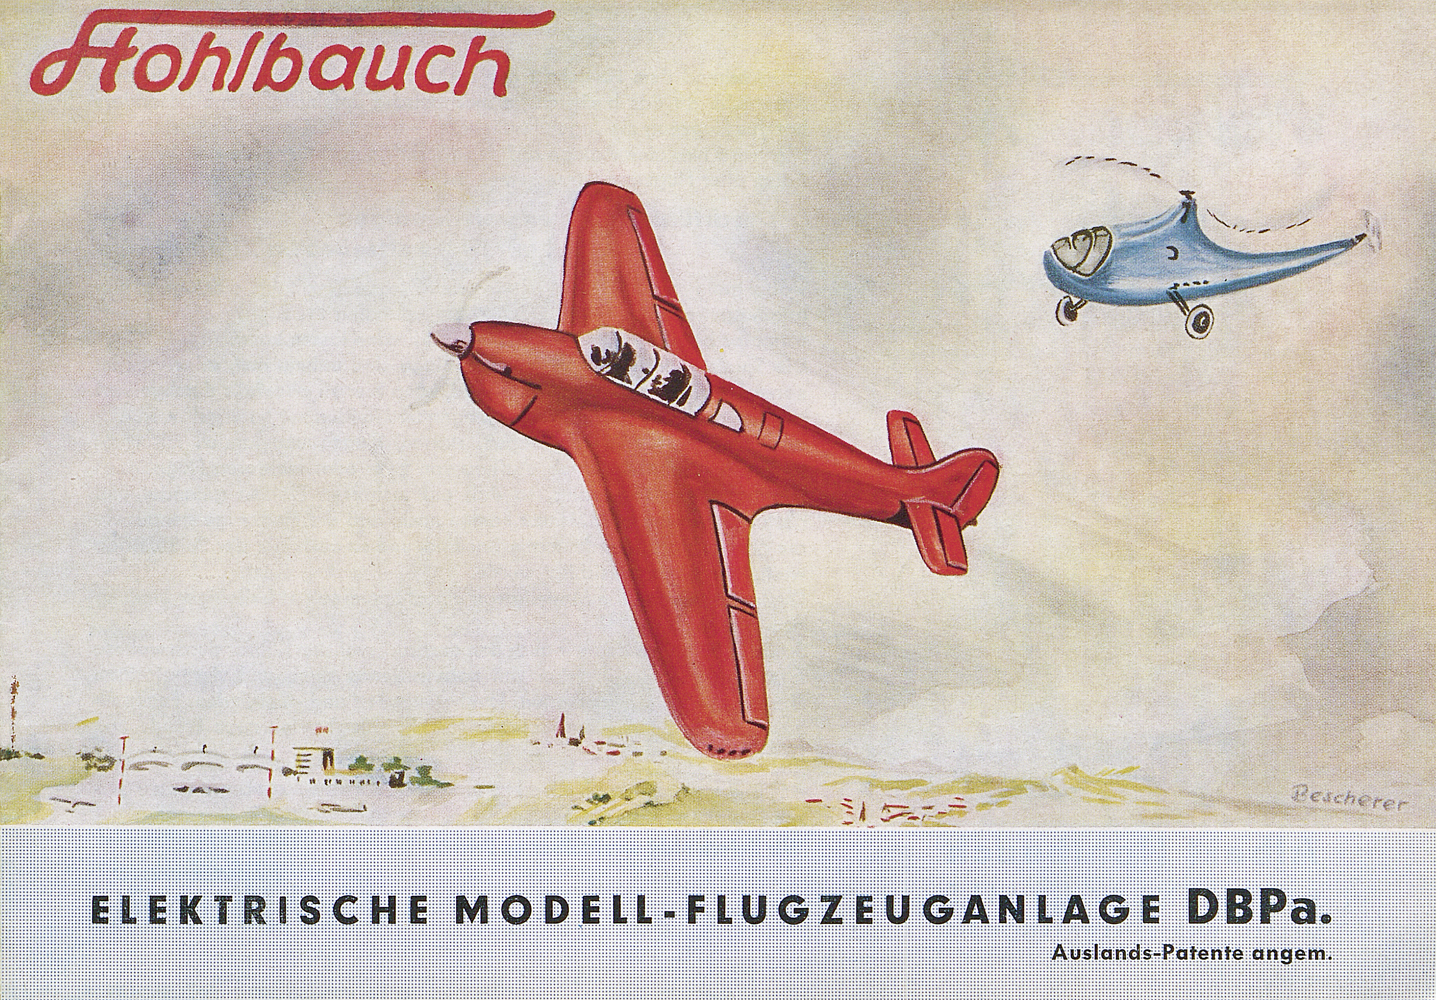 Albert Hohlbauch Katalog 1954